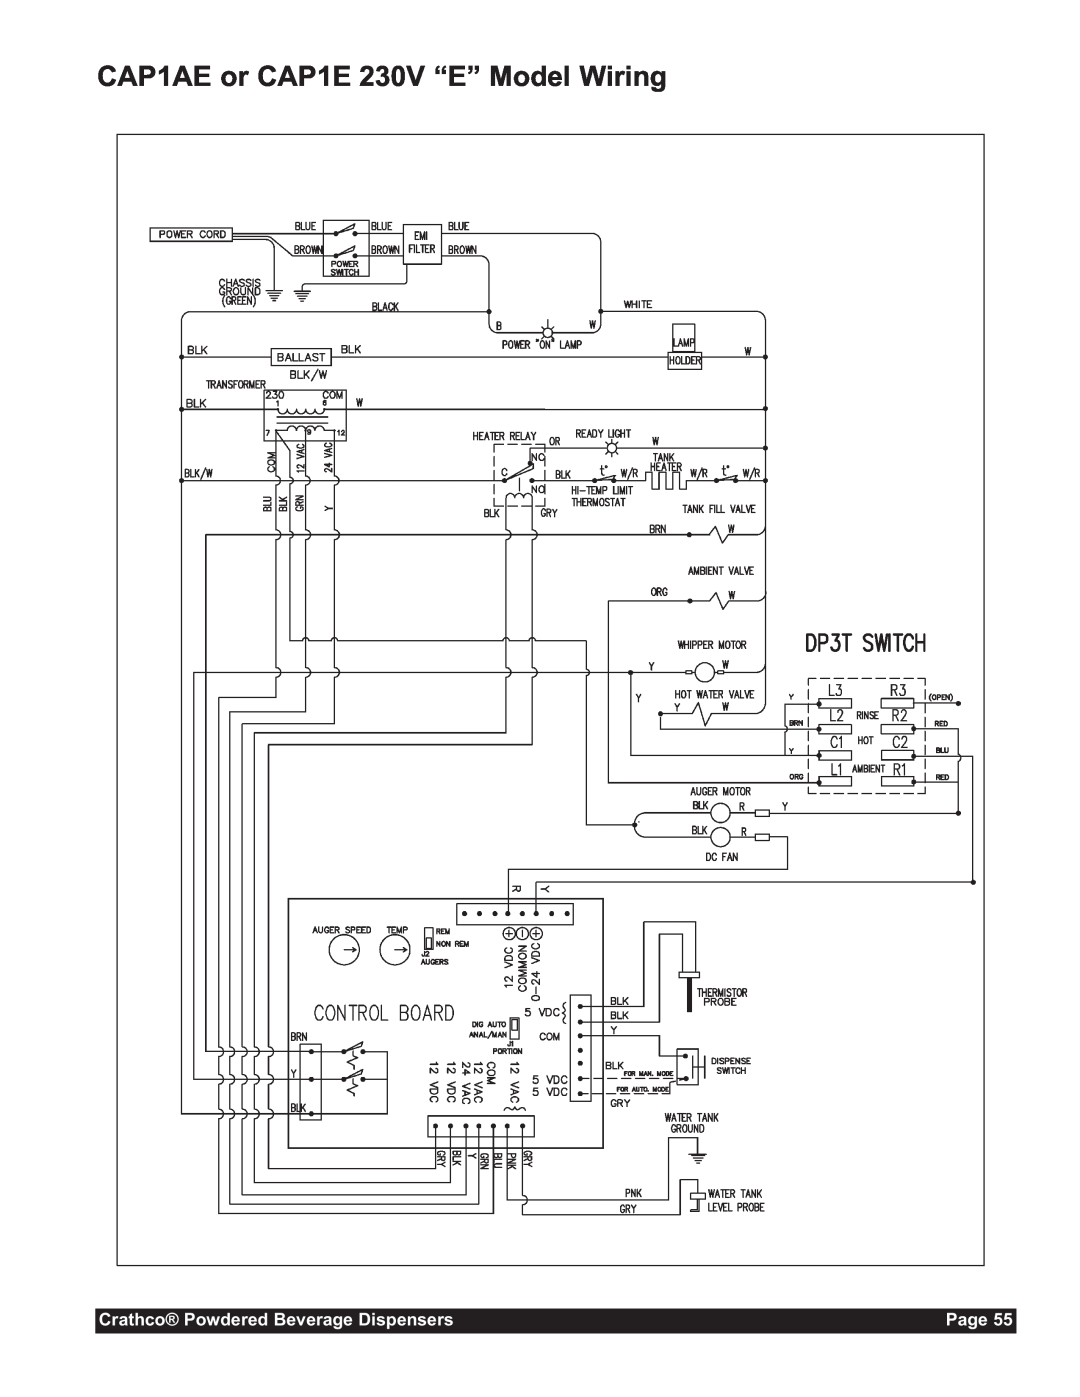 Grindmaster CC-302-20 service manual CAP1AE or CAP1E 230V “E” Model Wiring, Crathco Powdered Beverage Dispensers, Page 